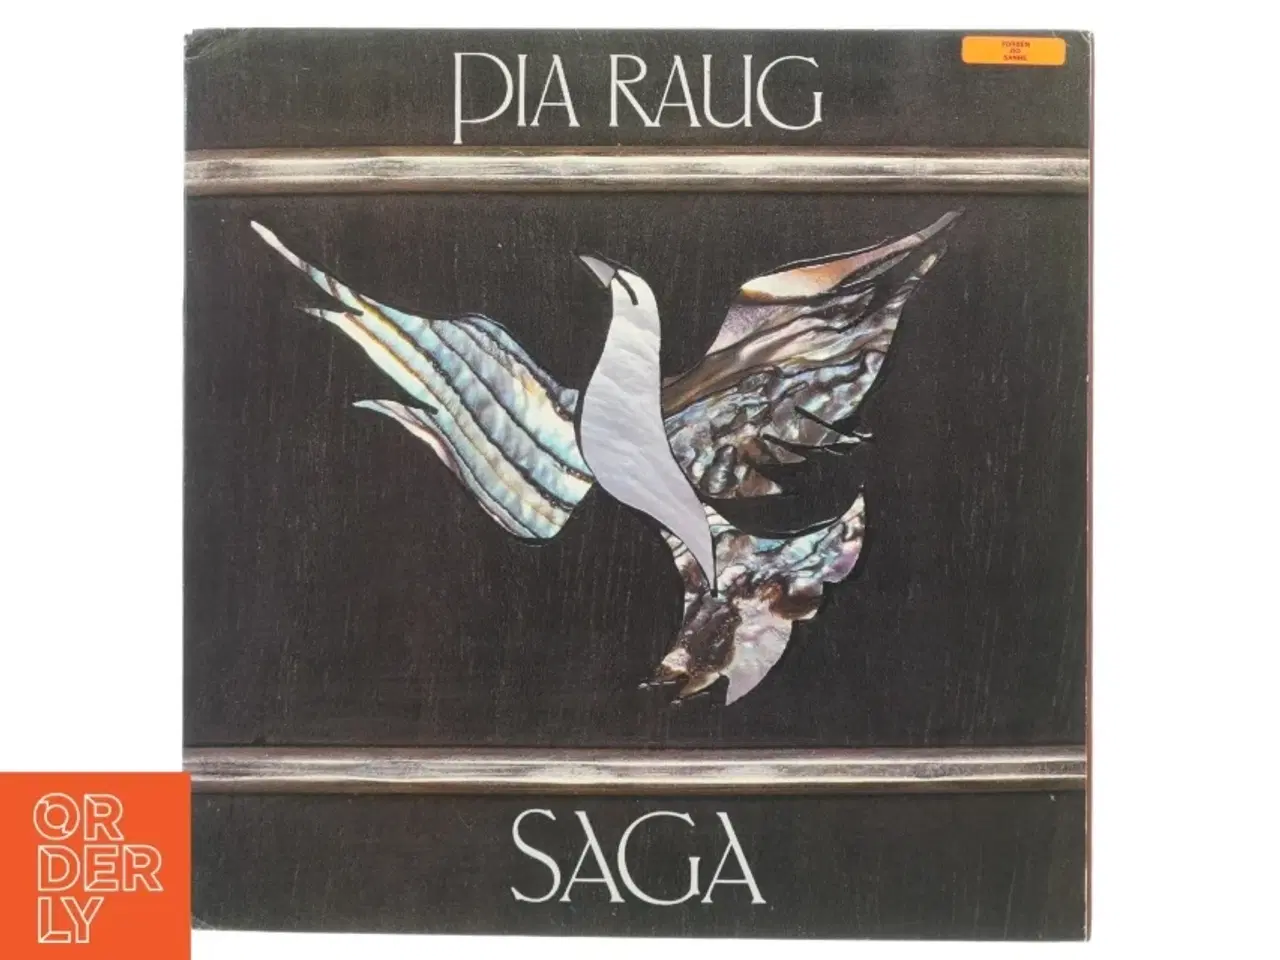 Billede 1 - Pia Raug - Saga Vinylplade fra Medley Records (str. 31 x 31 cm)